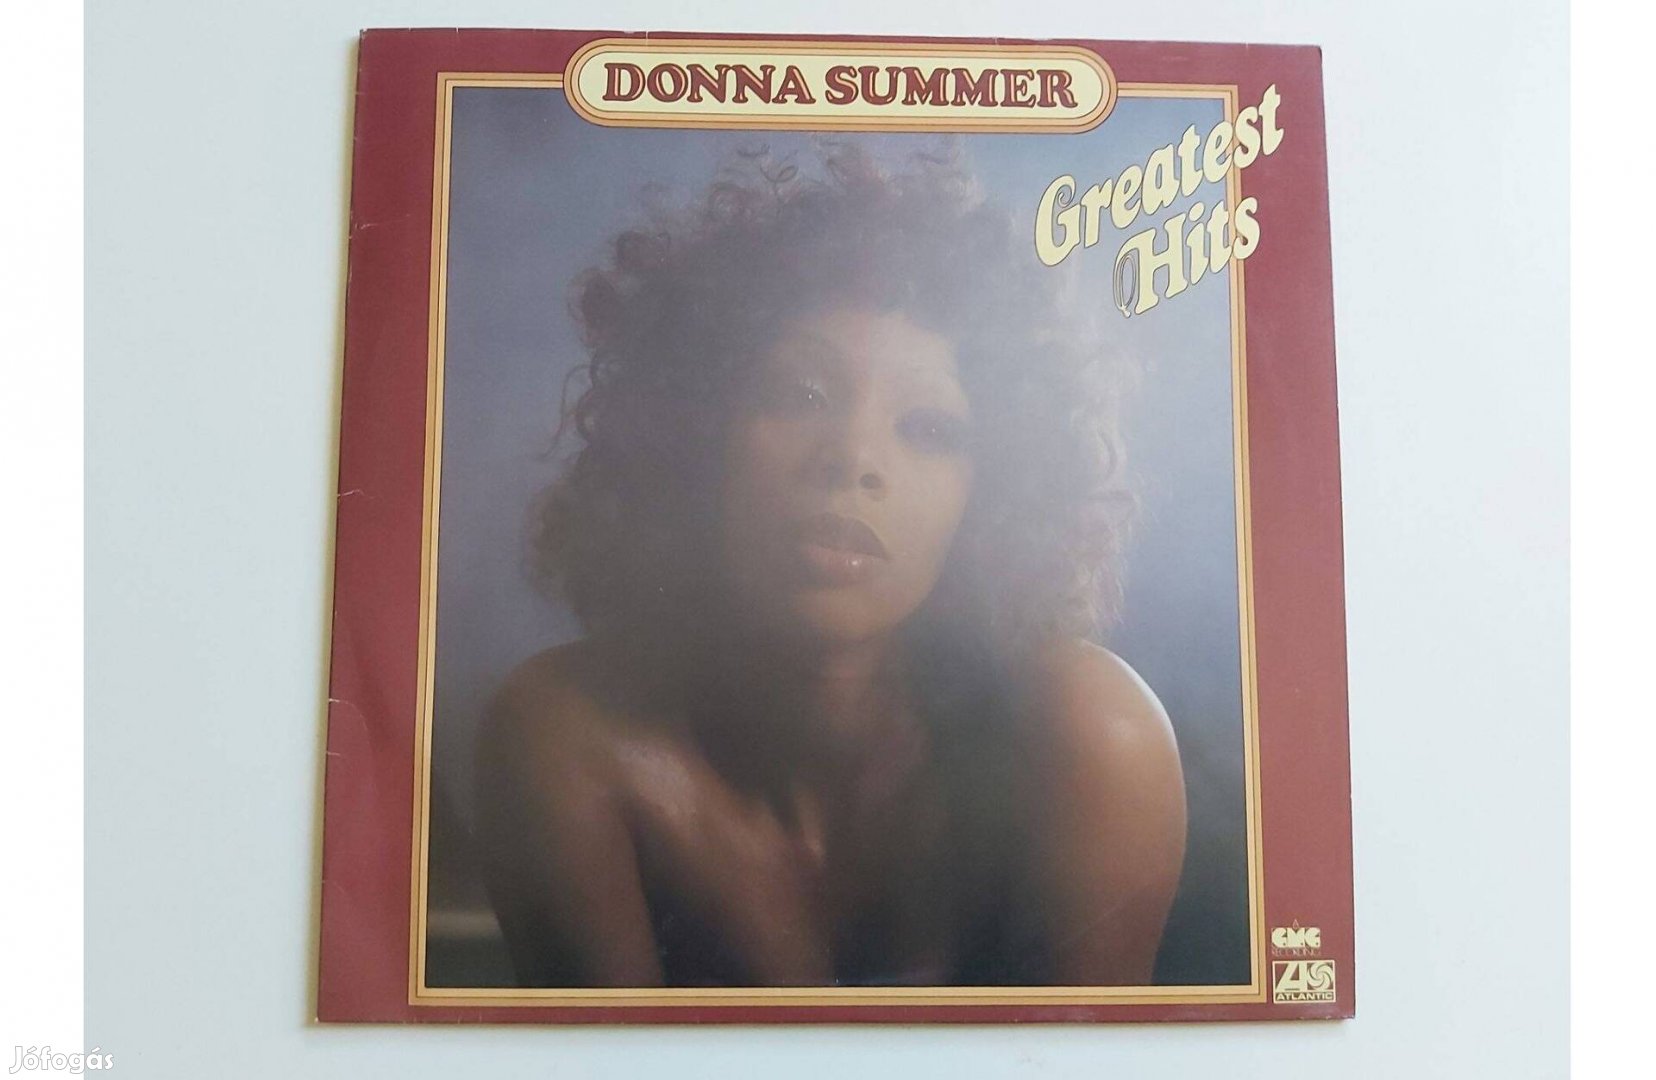 Donna Summer - Greatest Hits (LP album) 1977